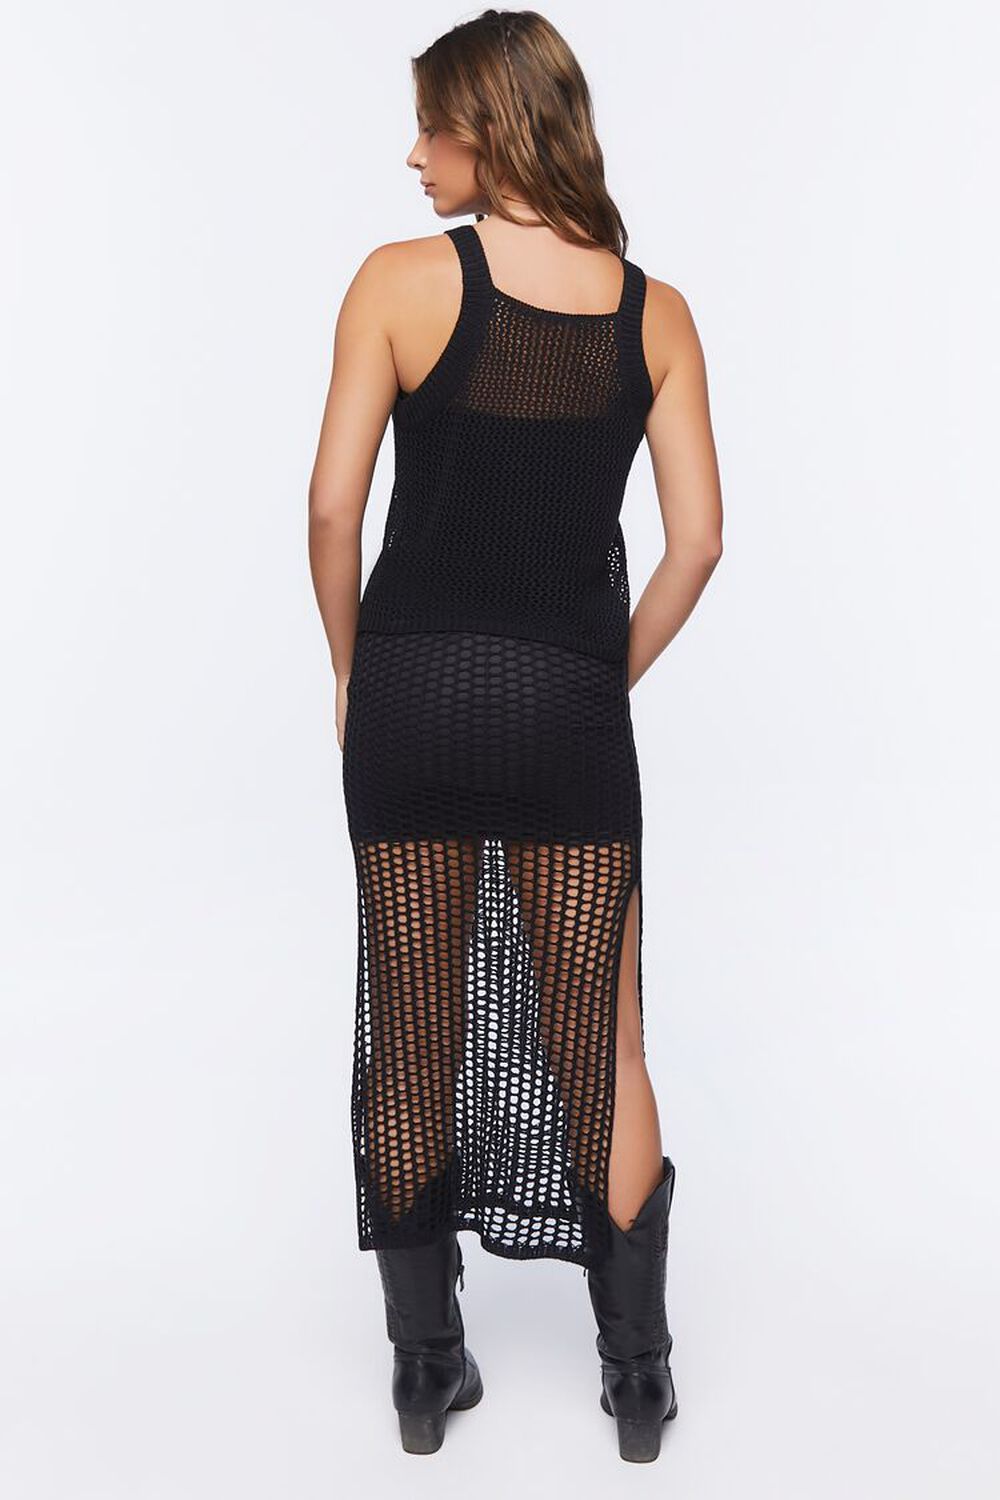 BLACK Crochet Tank Top & Midi Skirt Set, image 3